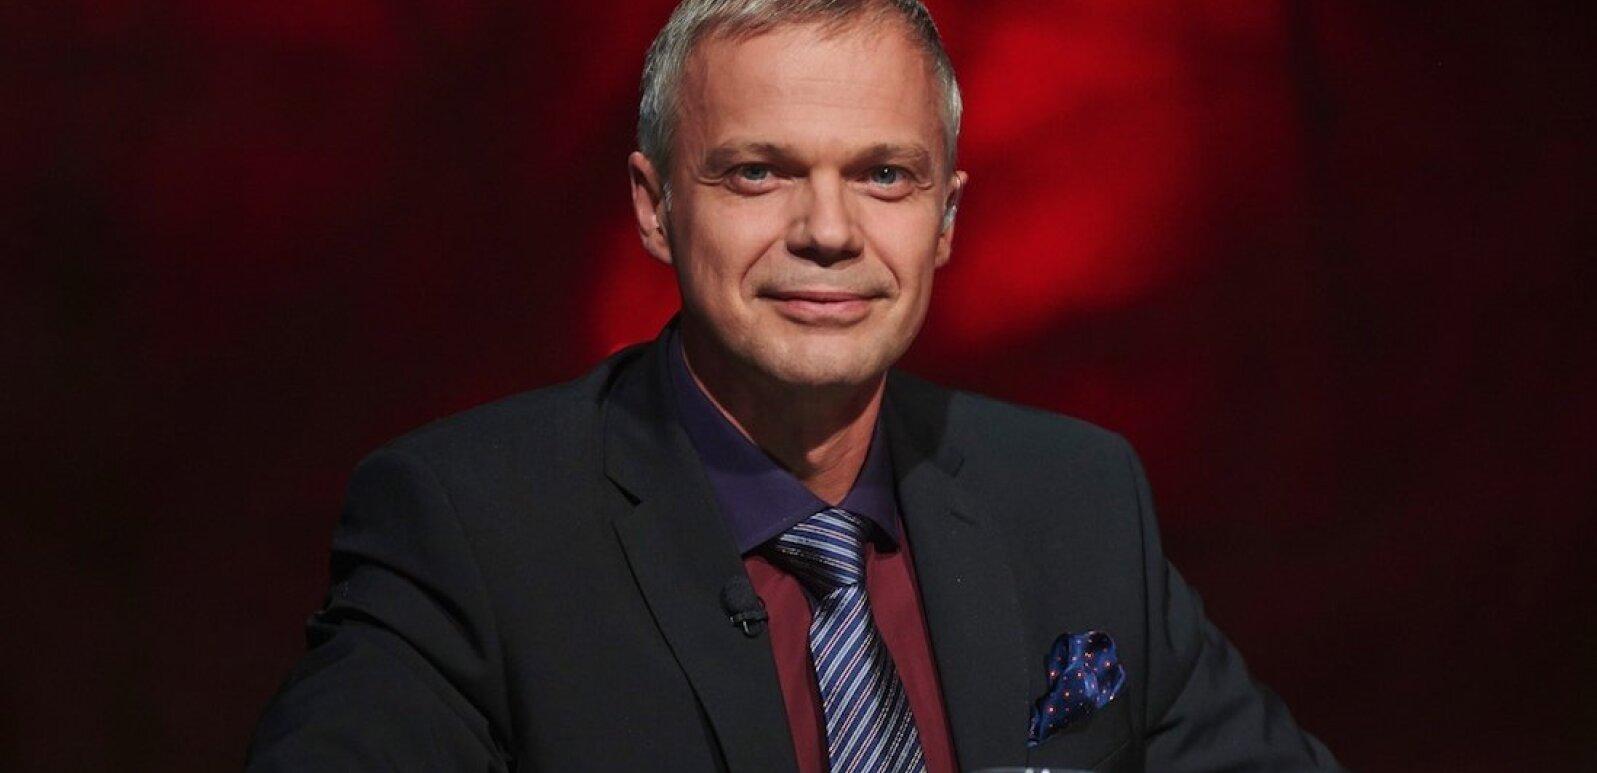 Indrek Treufeldt becomes the Public Relations Adviser to the President of Estonia